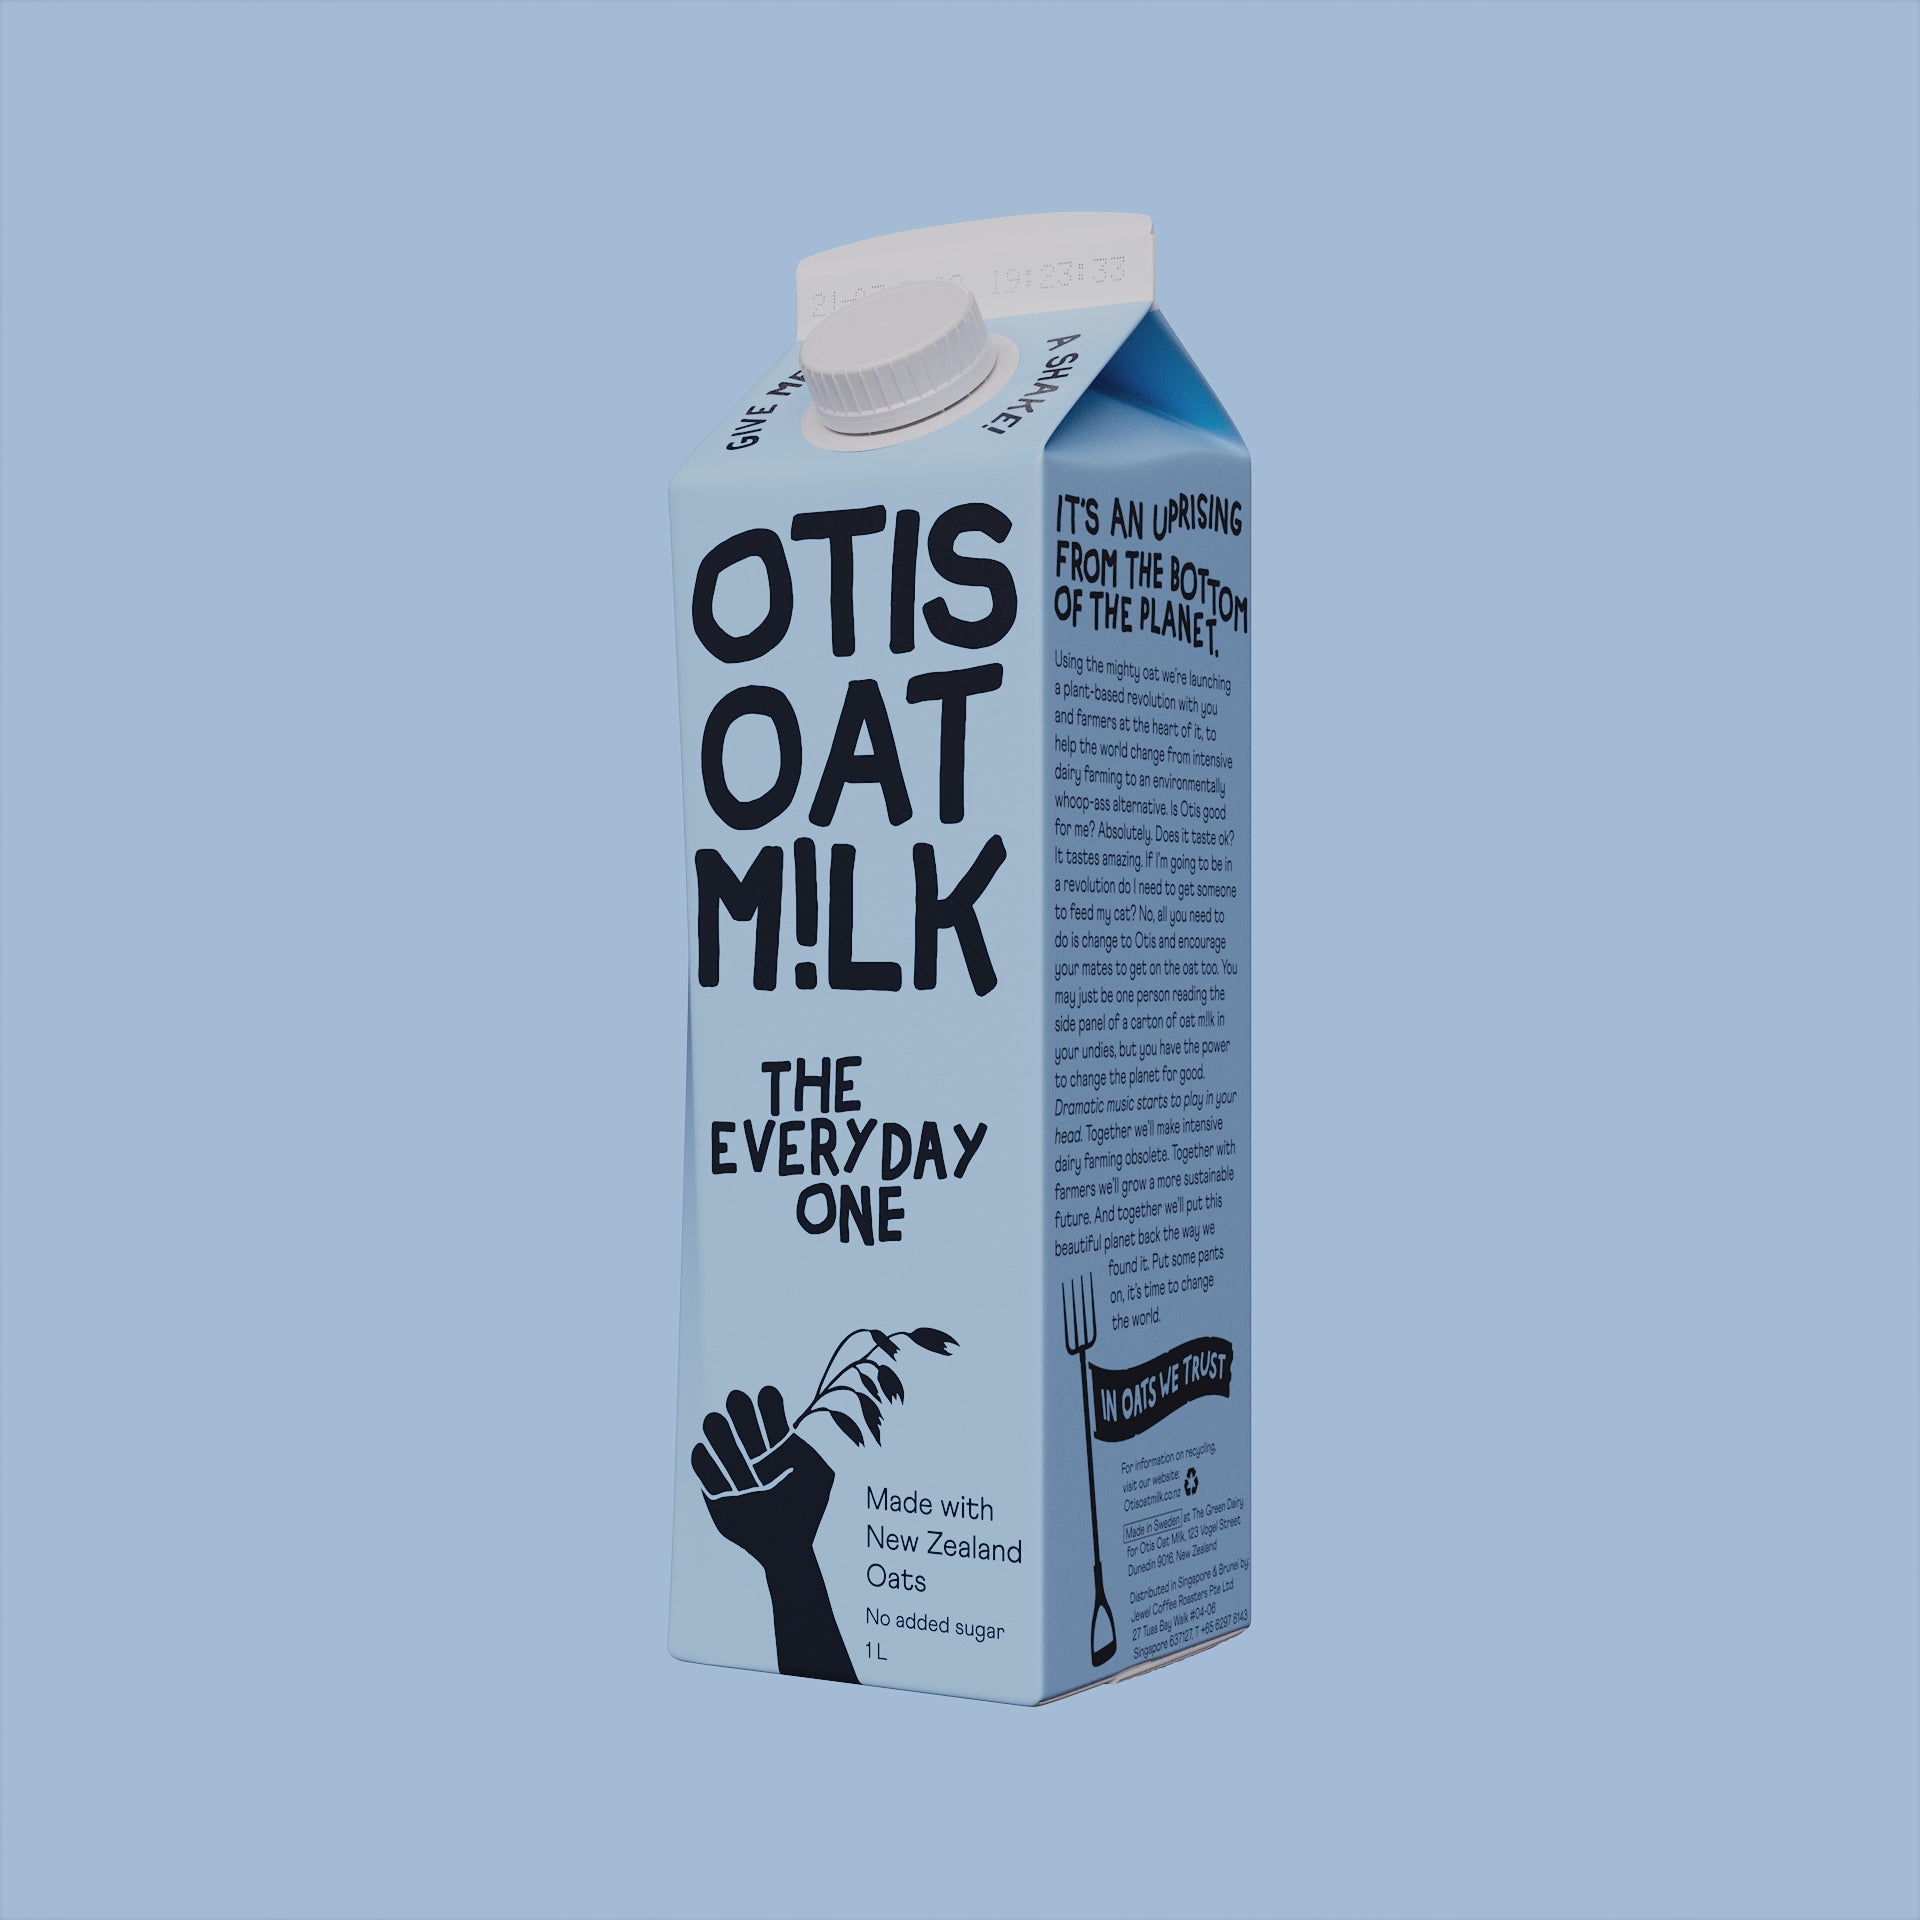 Otis Oat Milk (Everyday) 1L